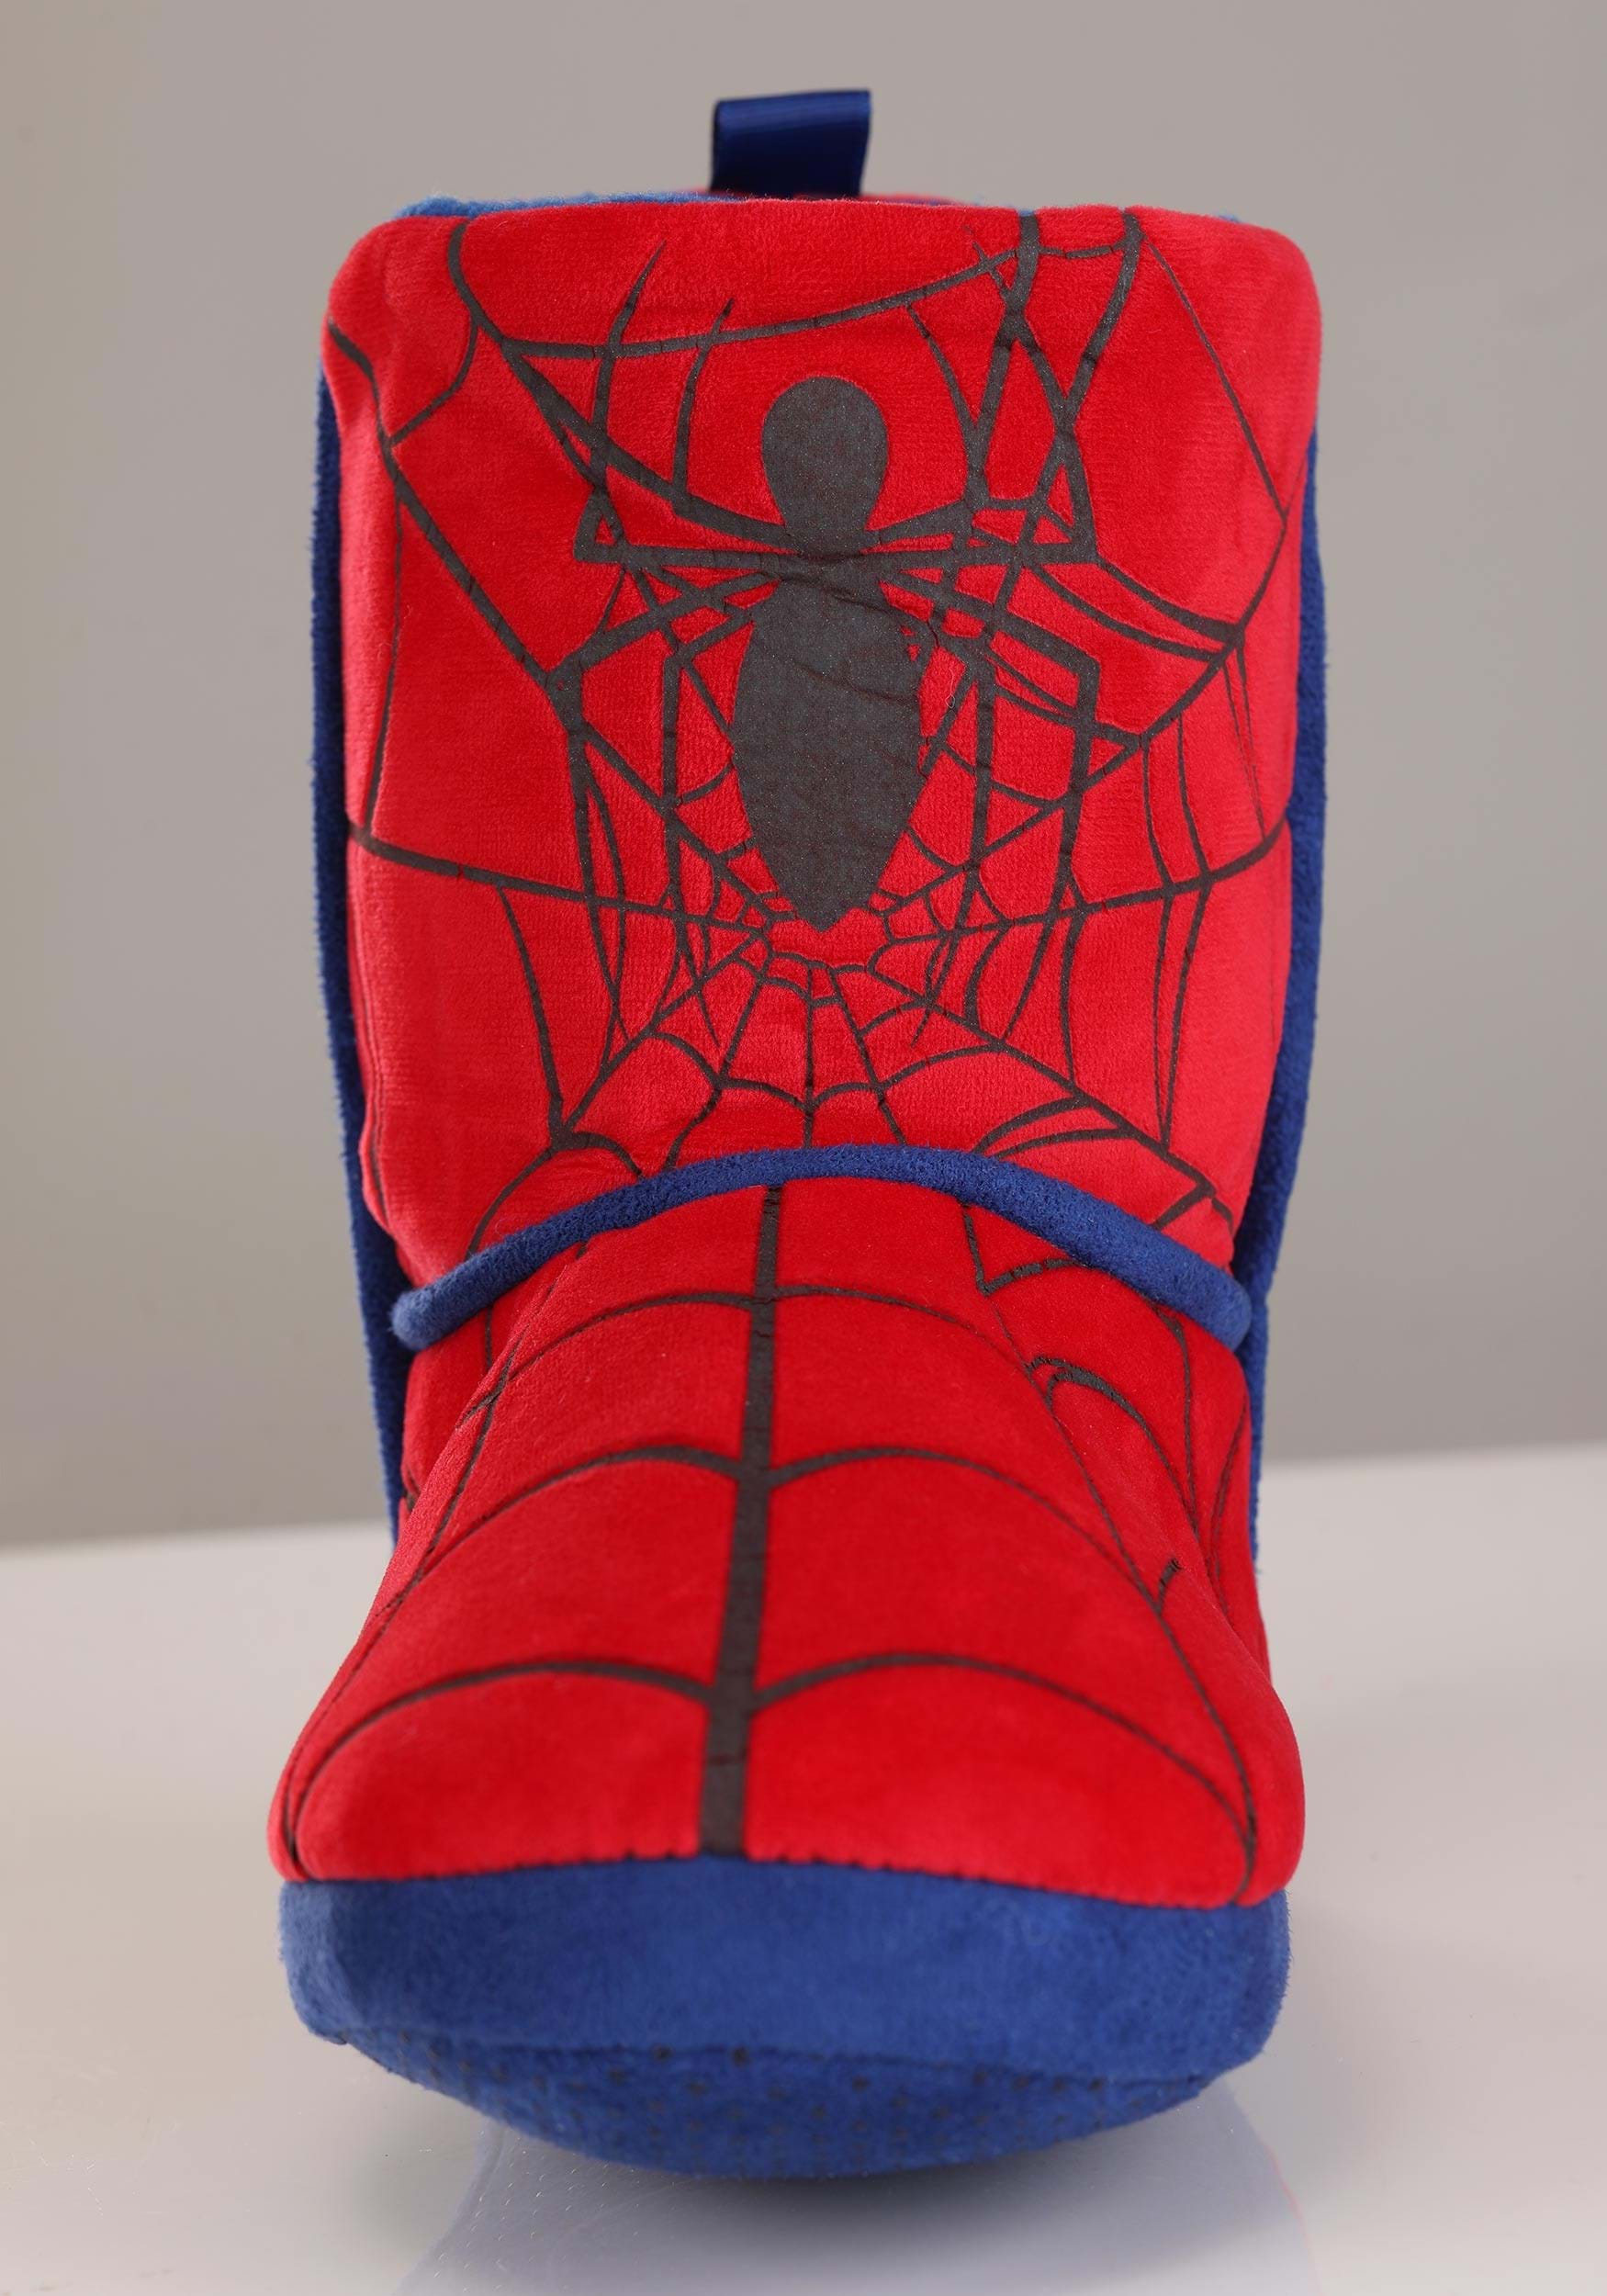 Caprice Boys' Spiderman Slippers - Black | Catch.com.au